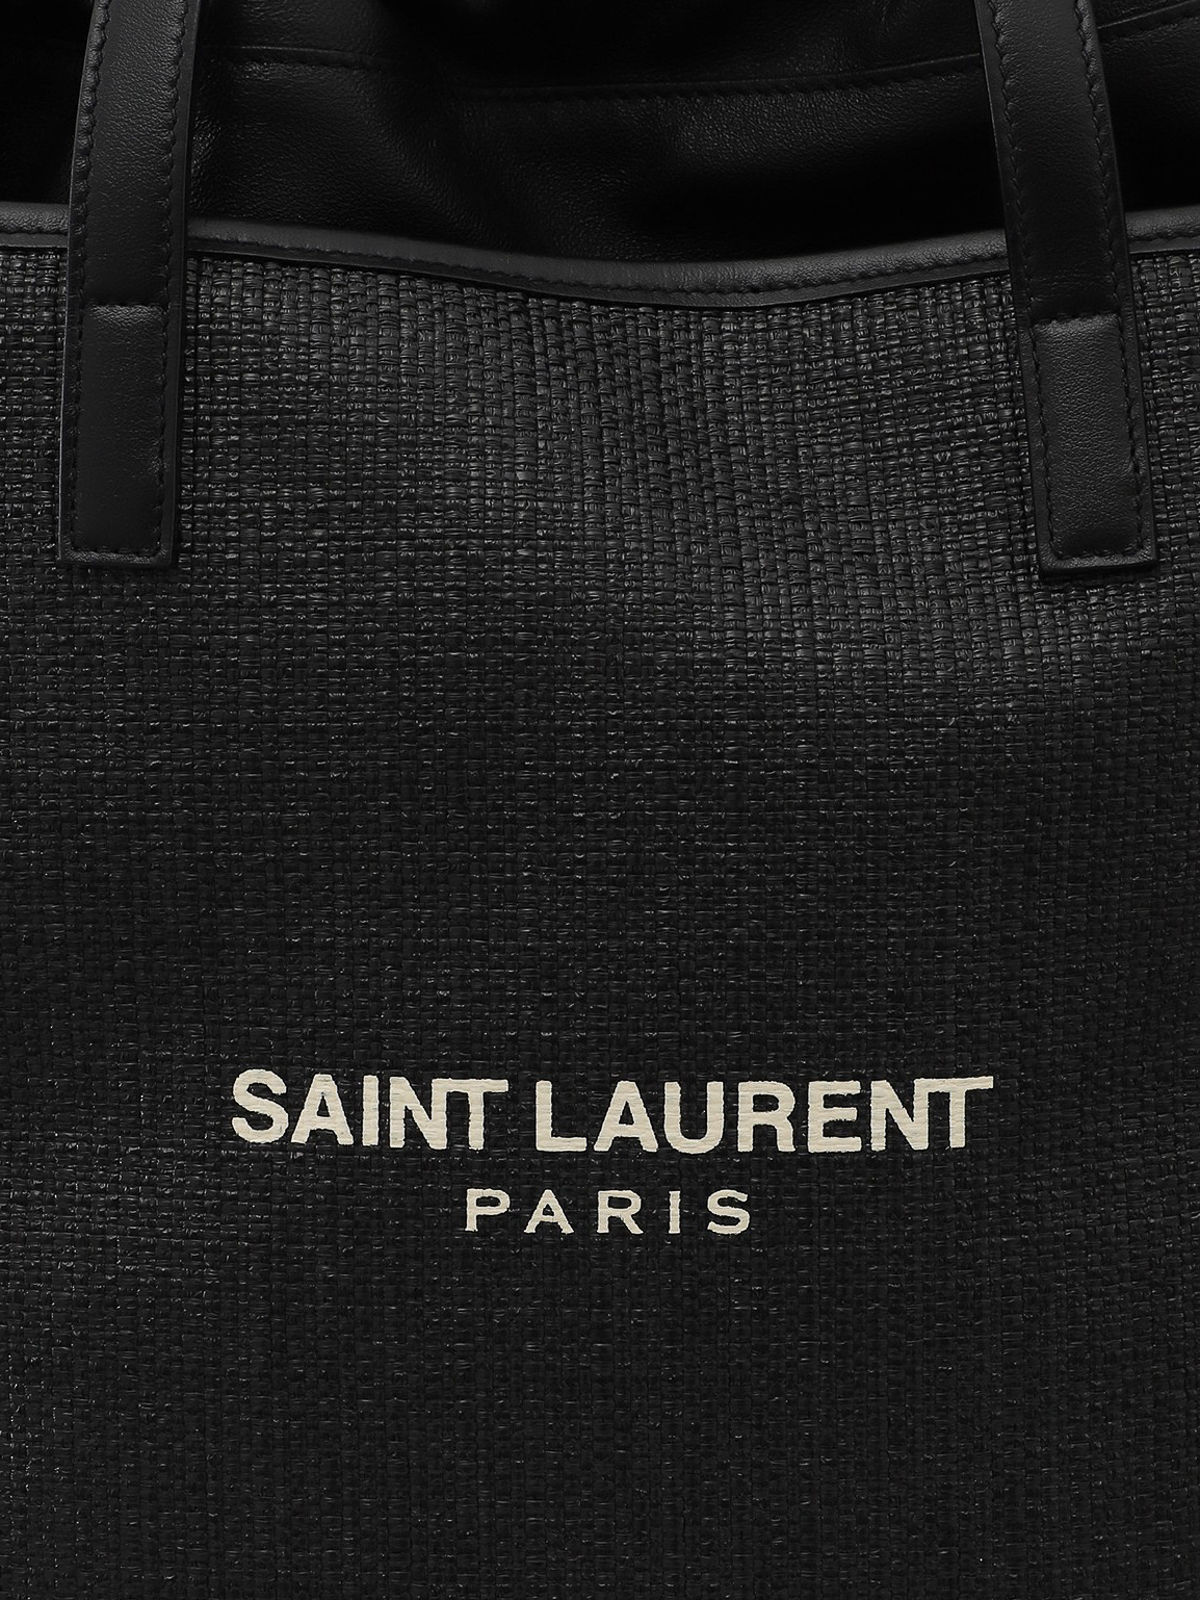 Totes bags Saint Laurent - Teddy raffia effect bag